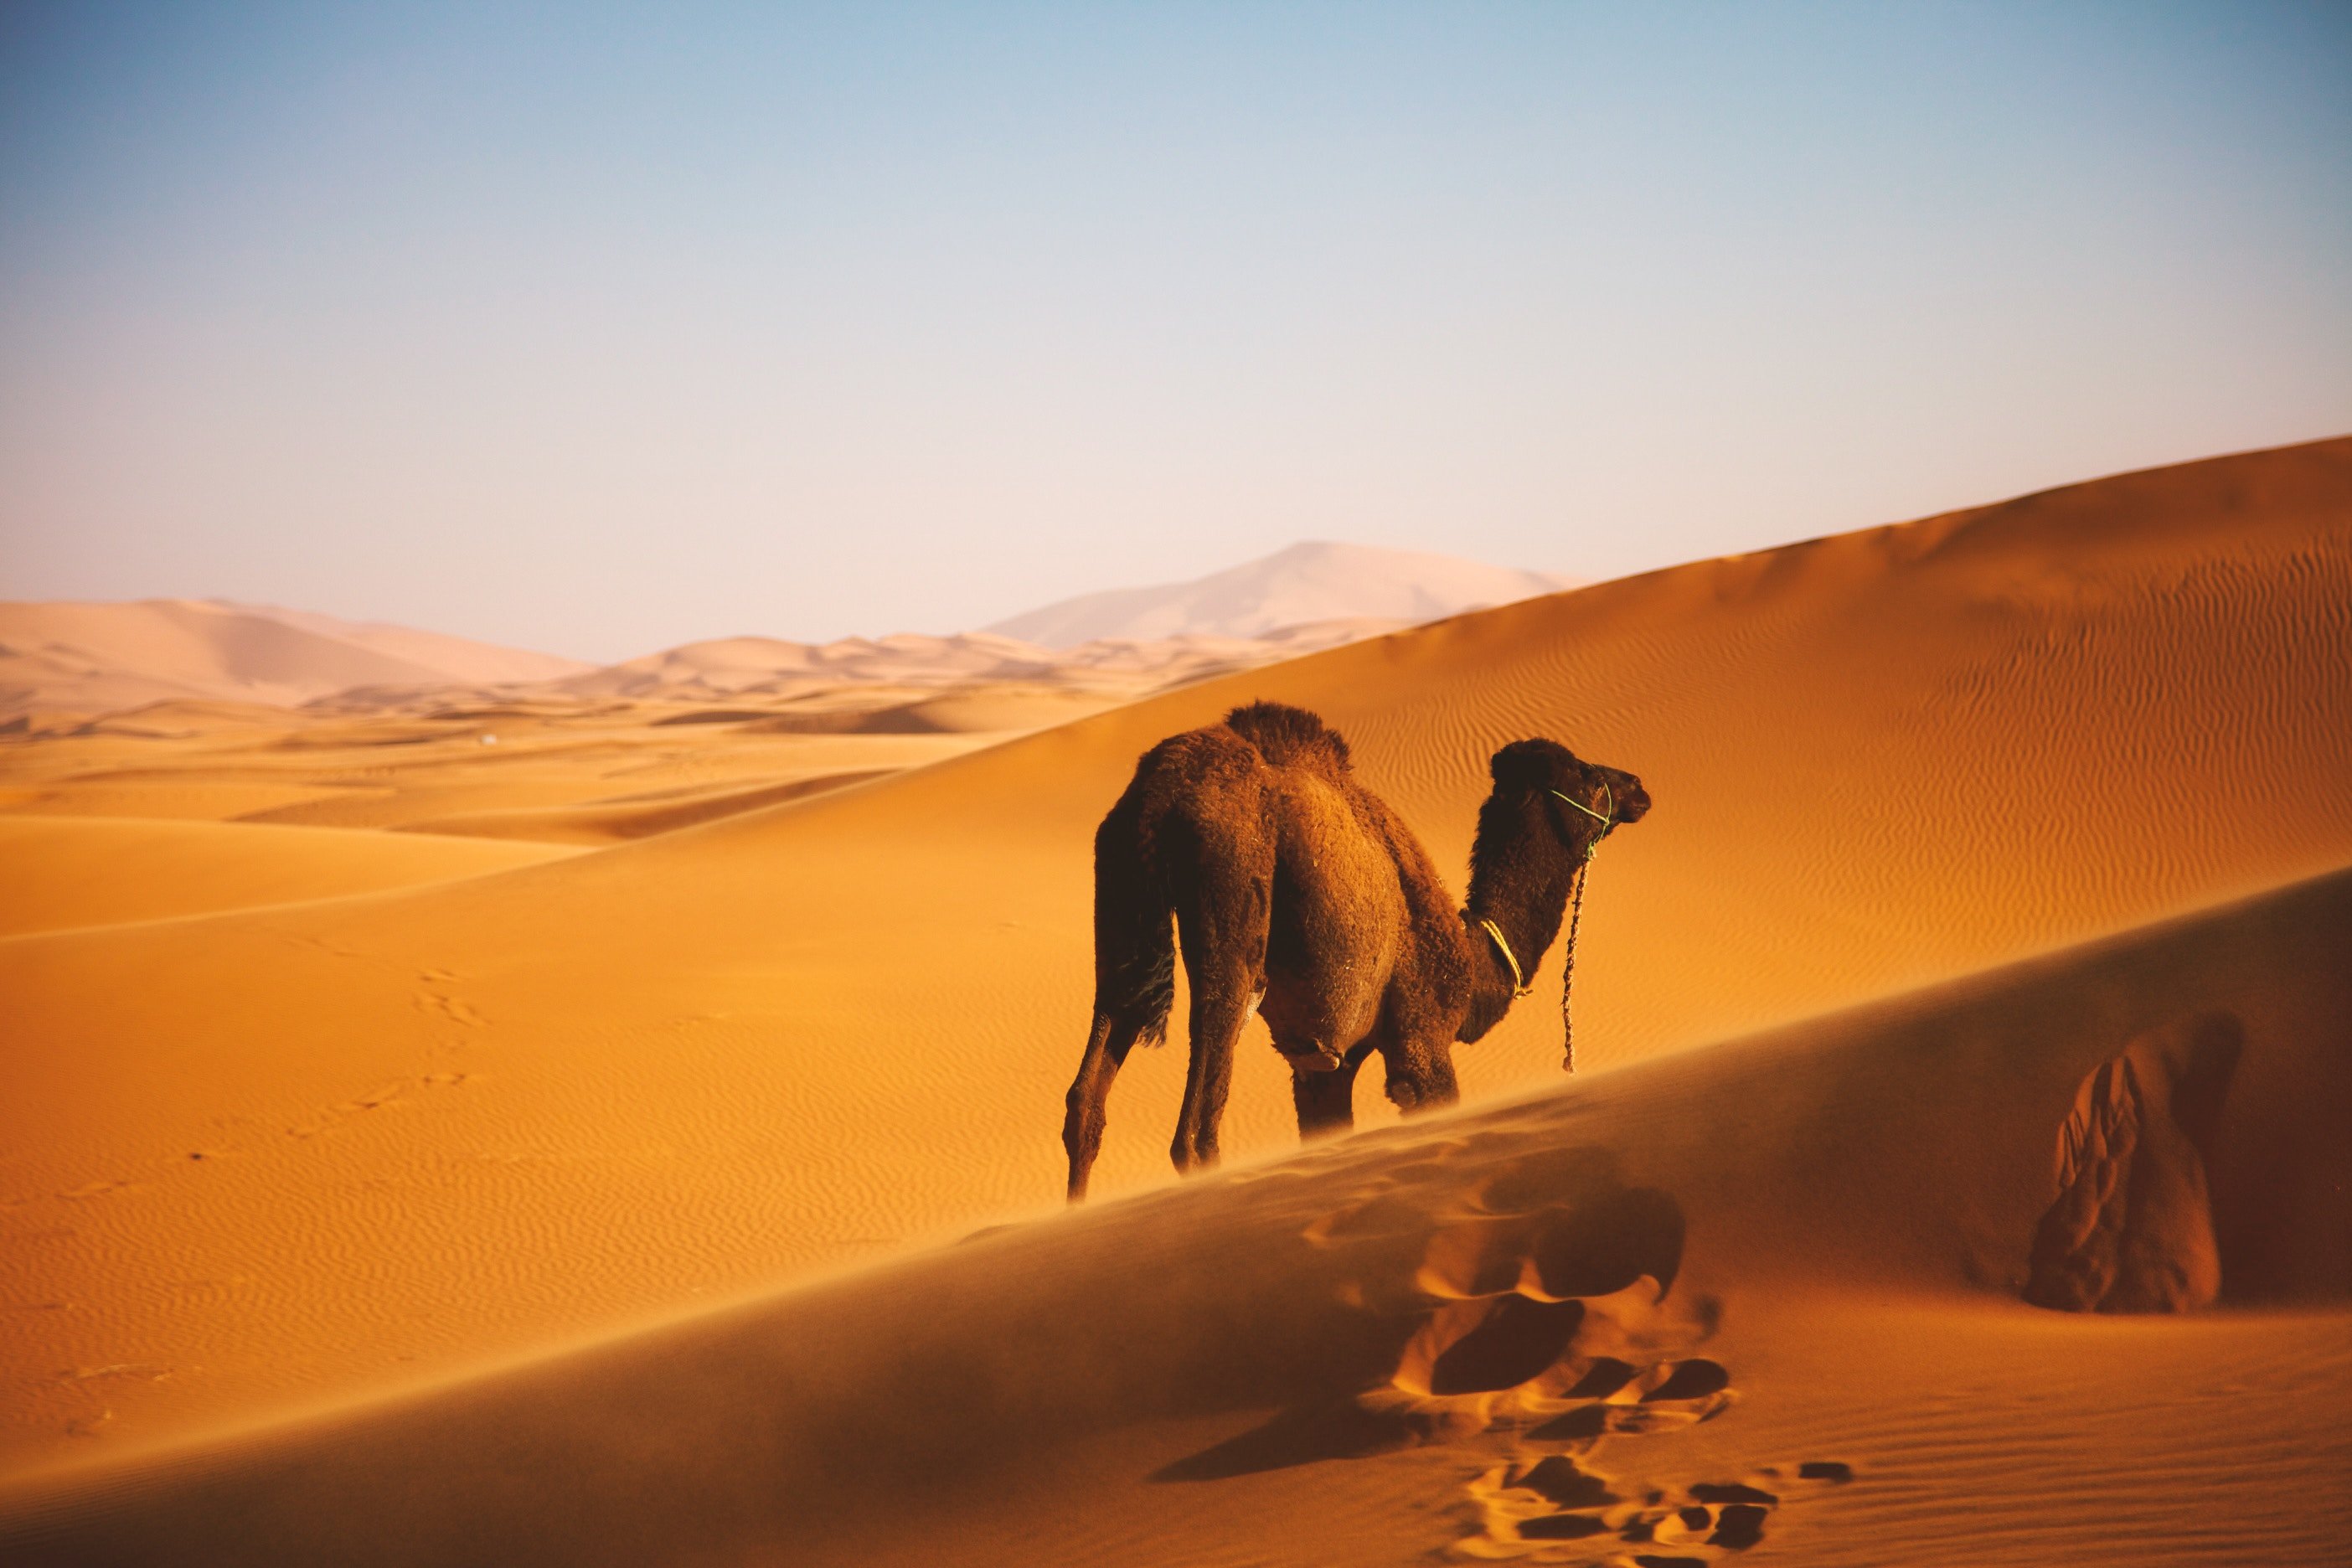 100+ Camel Images [HD] | Download Free Pictures On Unsplash